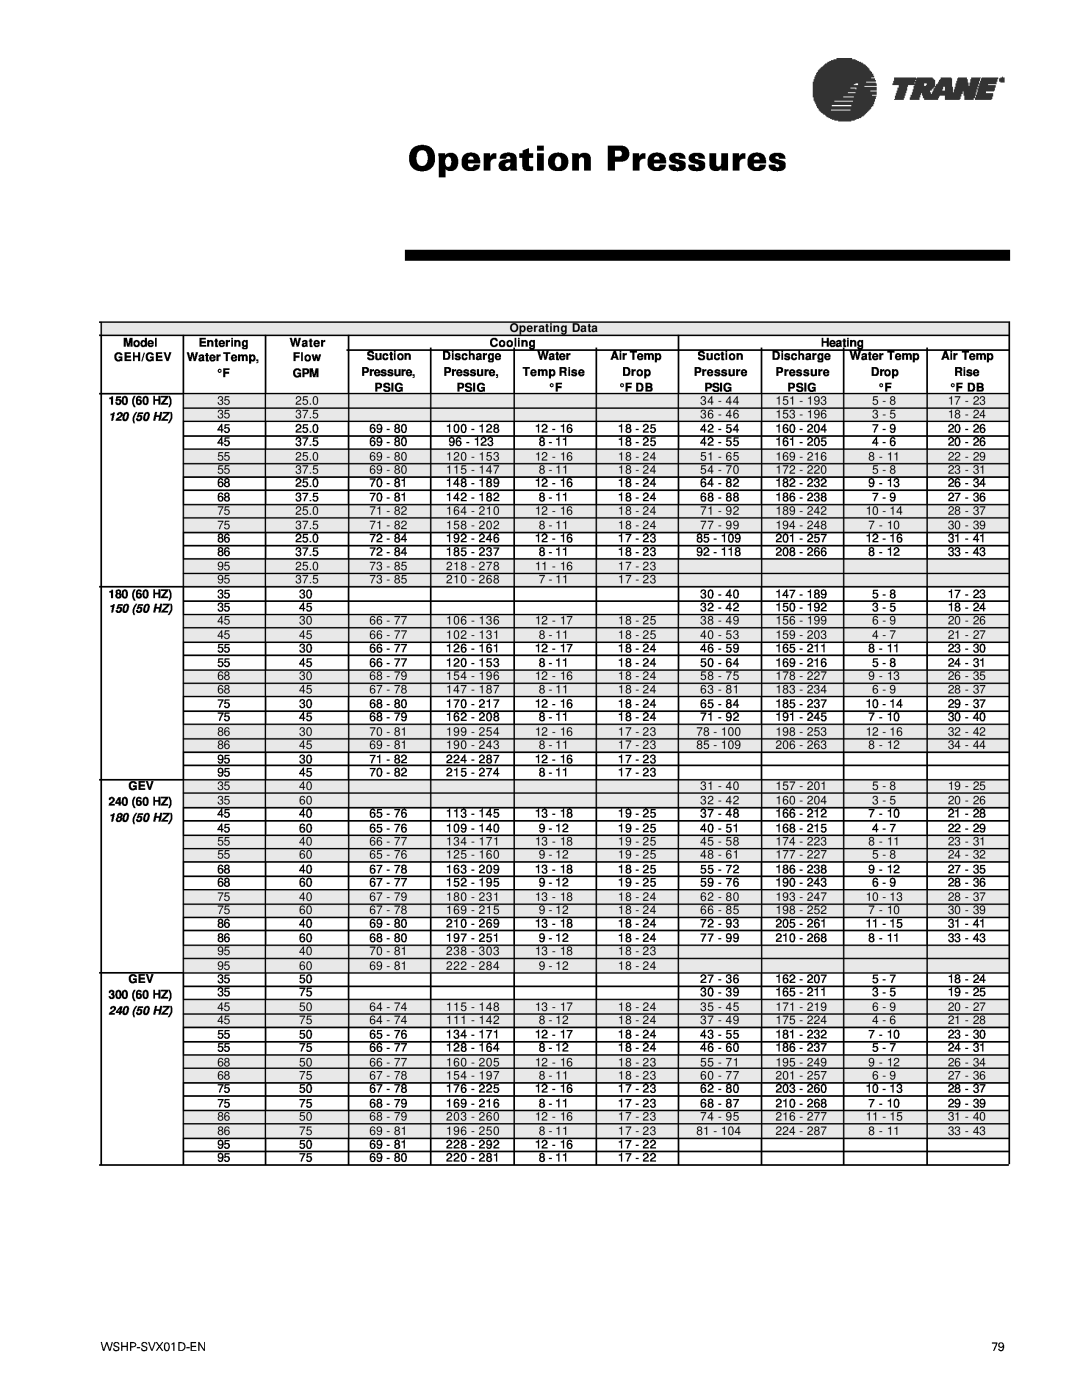 Trane GEV, GEH manual Operation Pressures, Model 